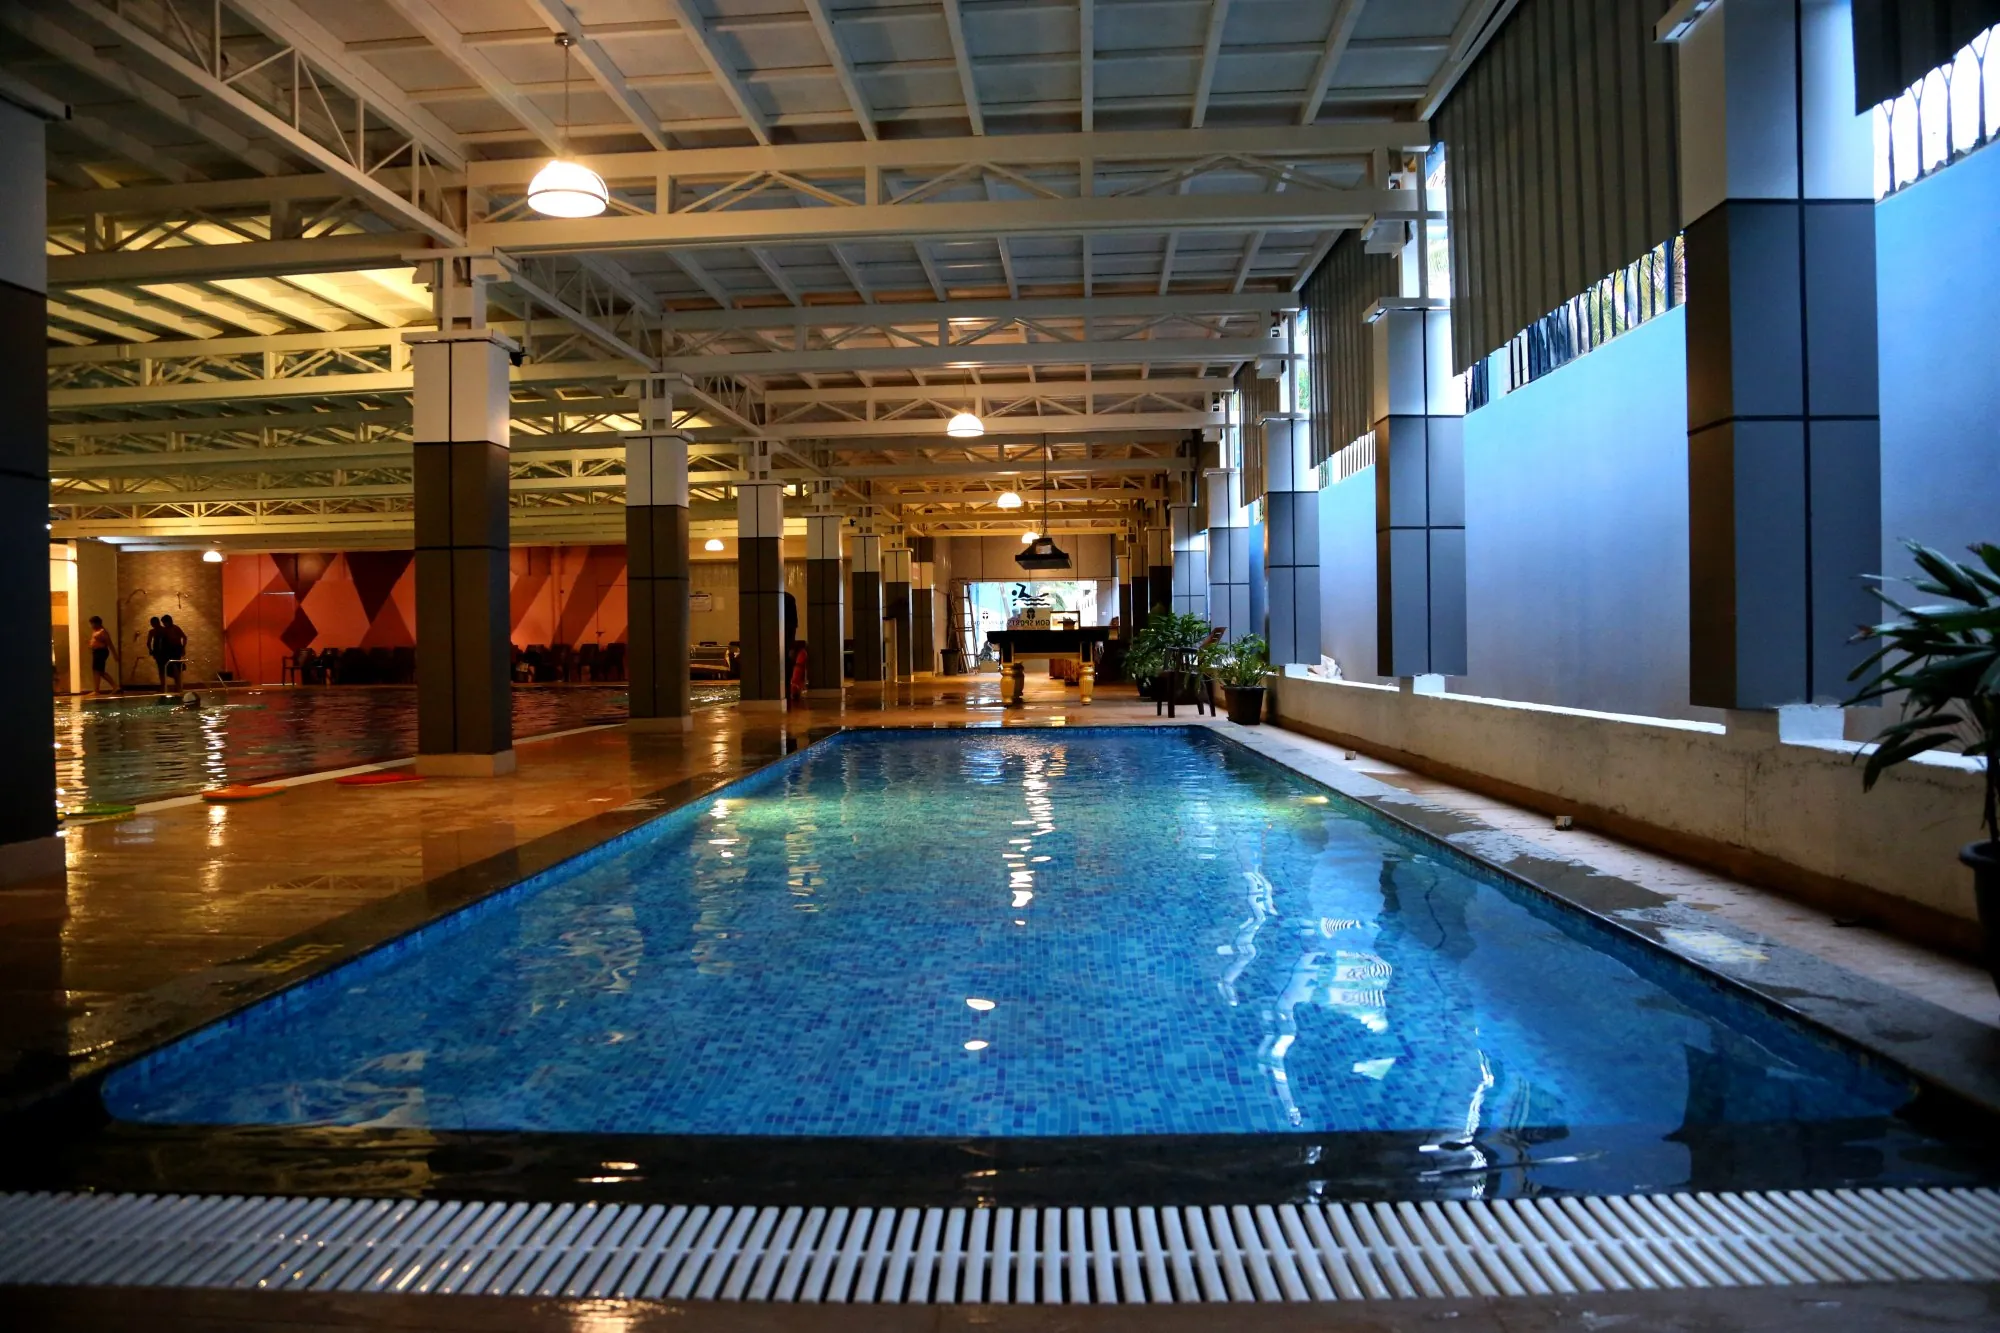 Agon Sports Swimming Pool